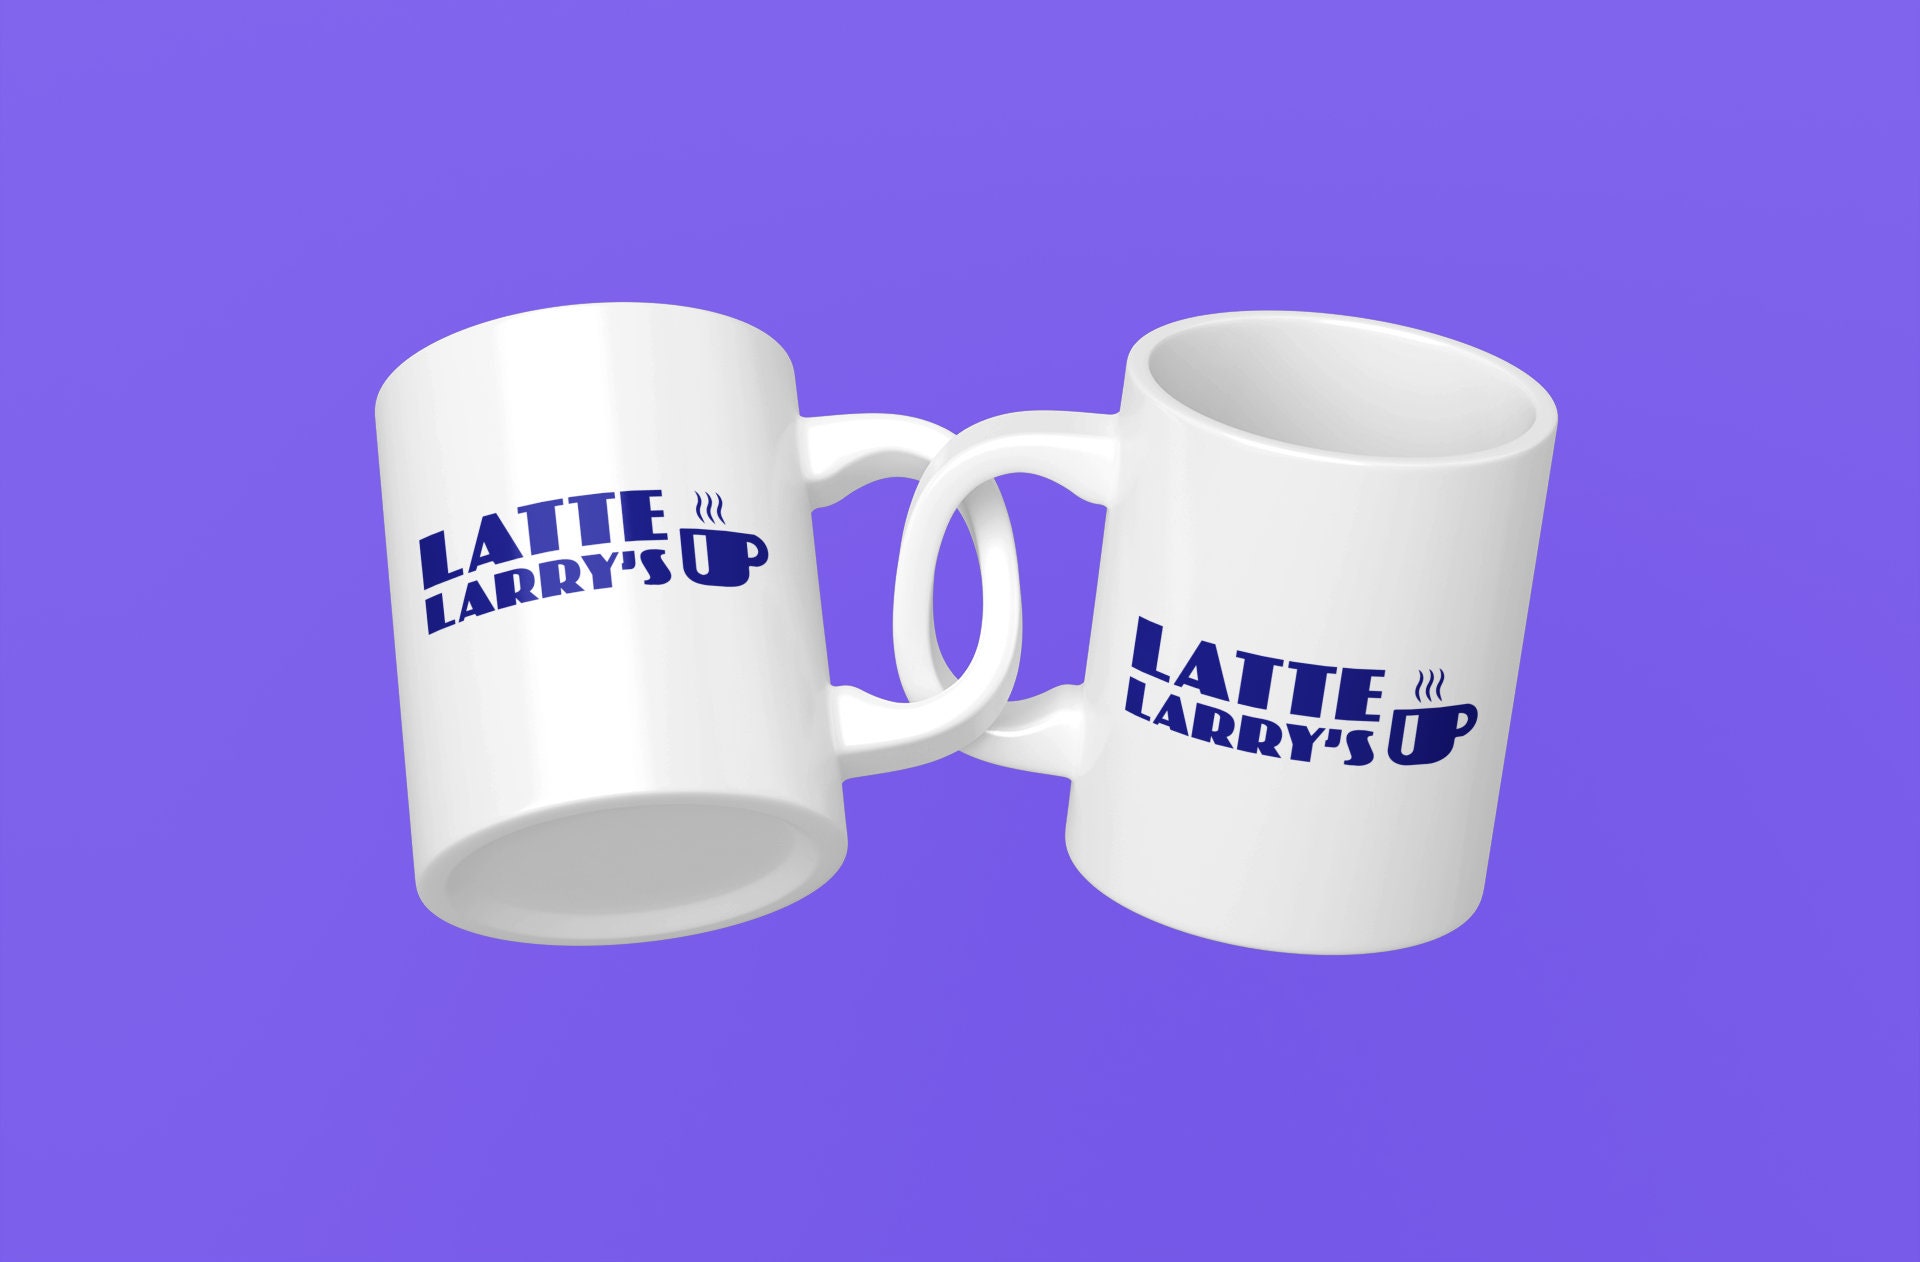 Latte Larry's self-heating Mug 